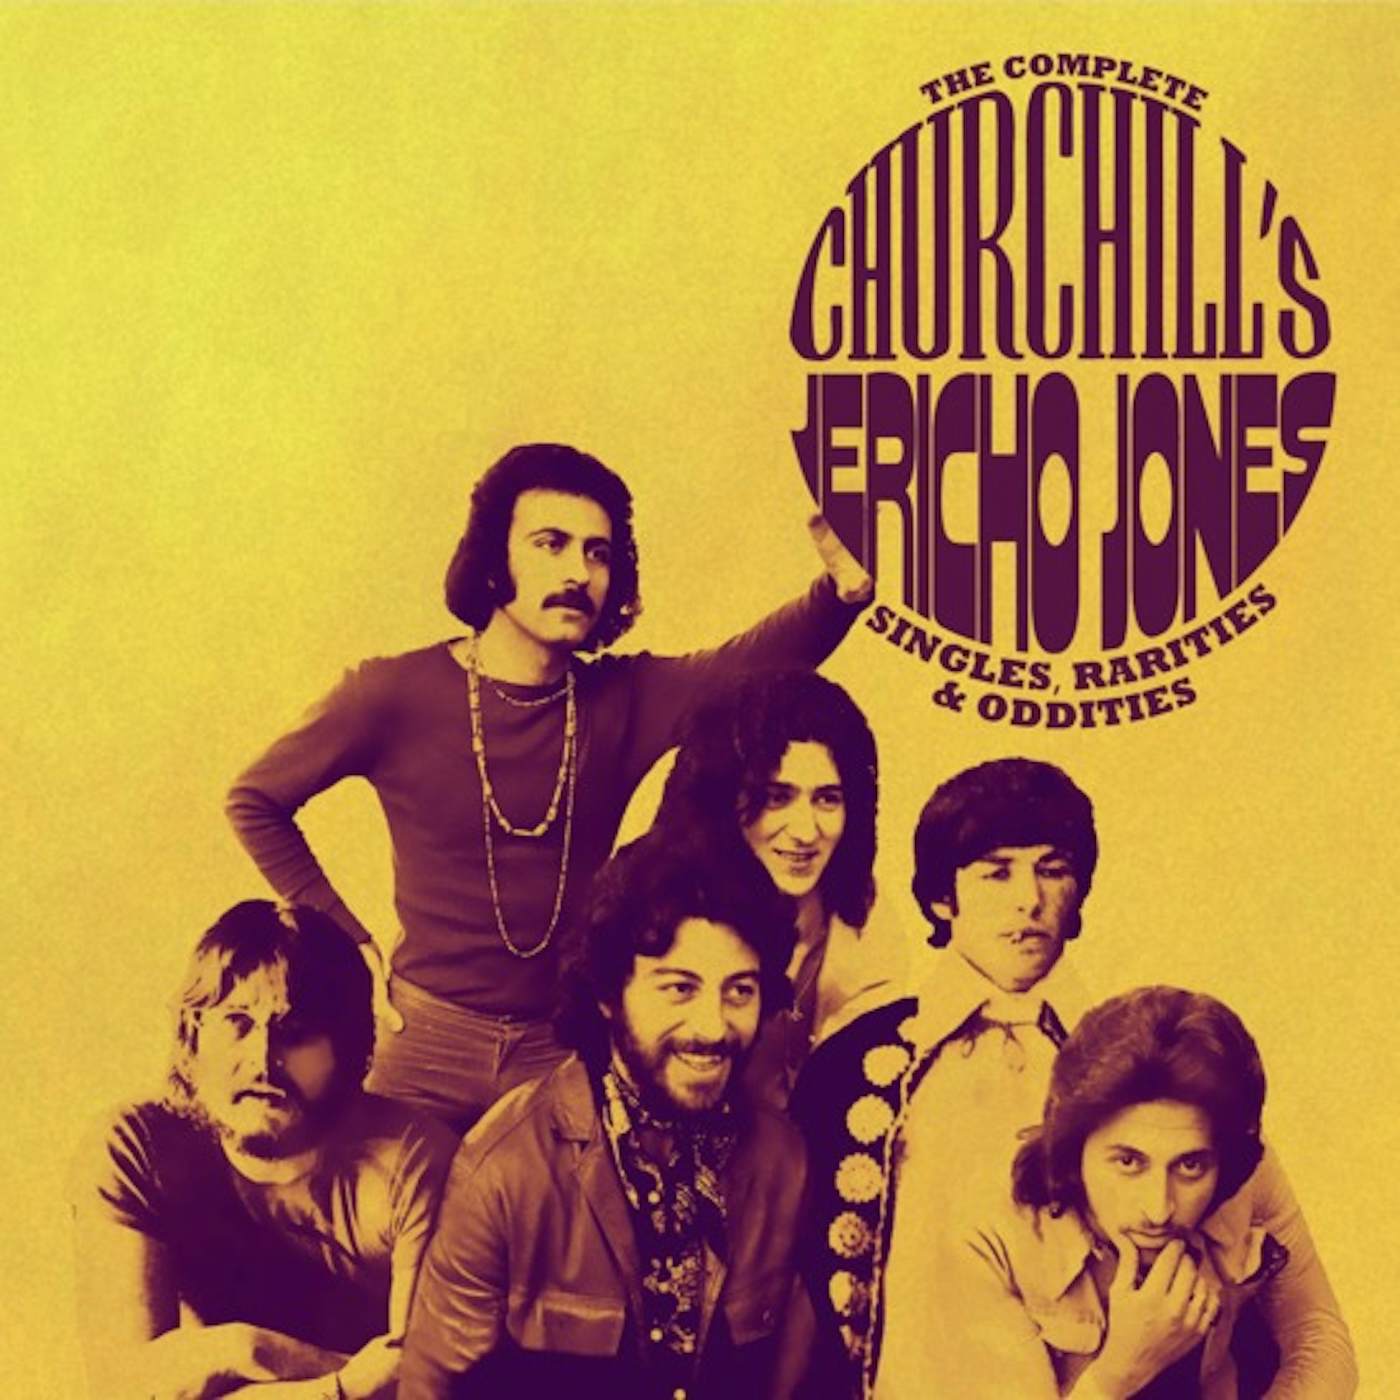 Churchills Complete Non-Album Singles, Rarities & Oddities Vinyl Record